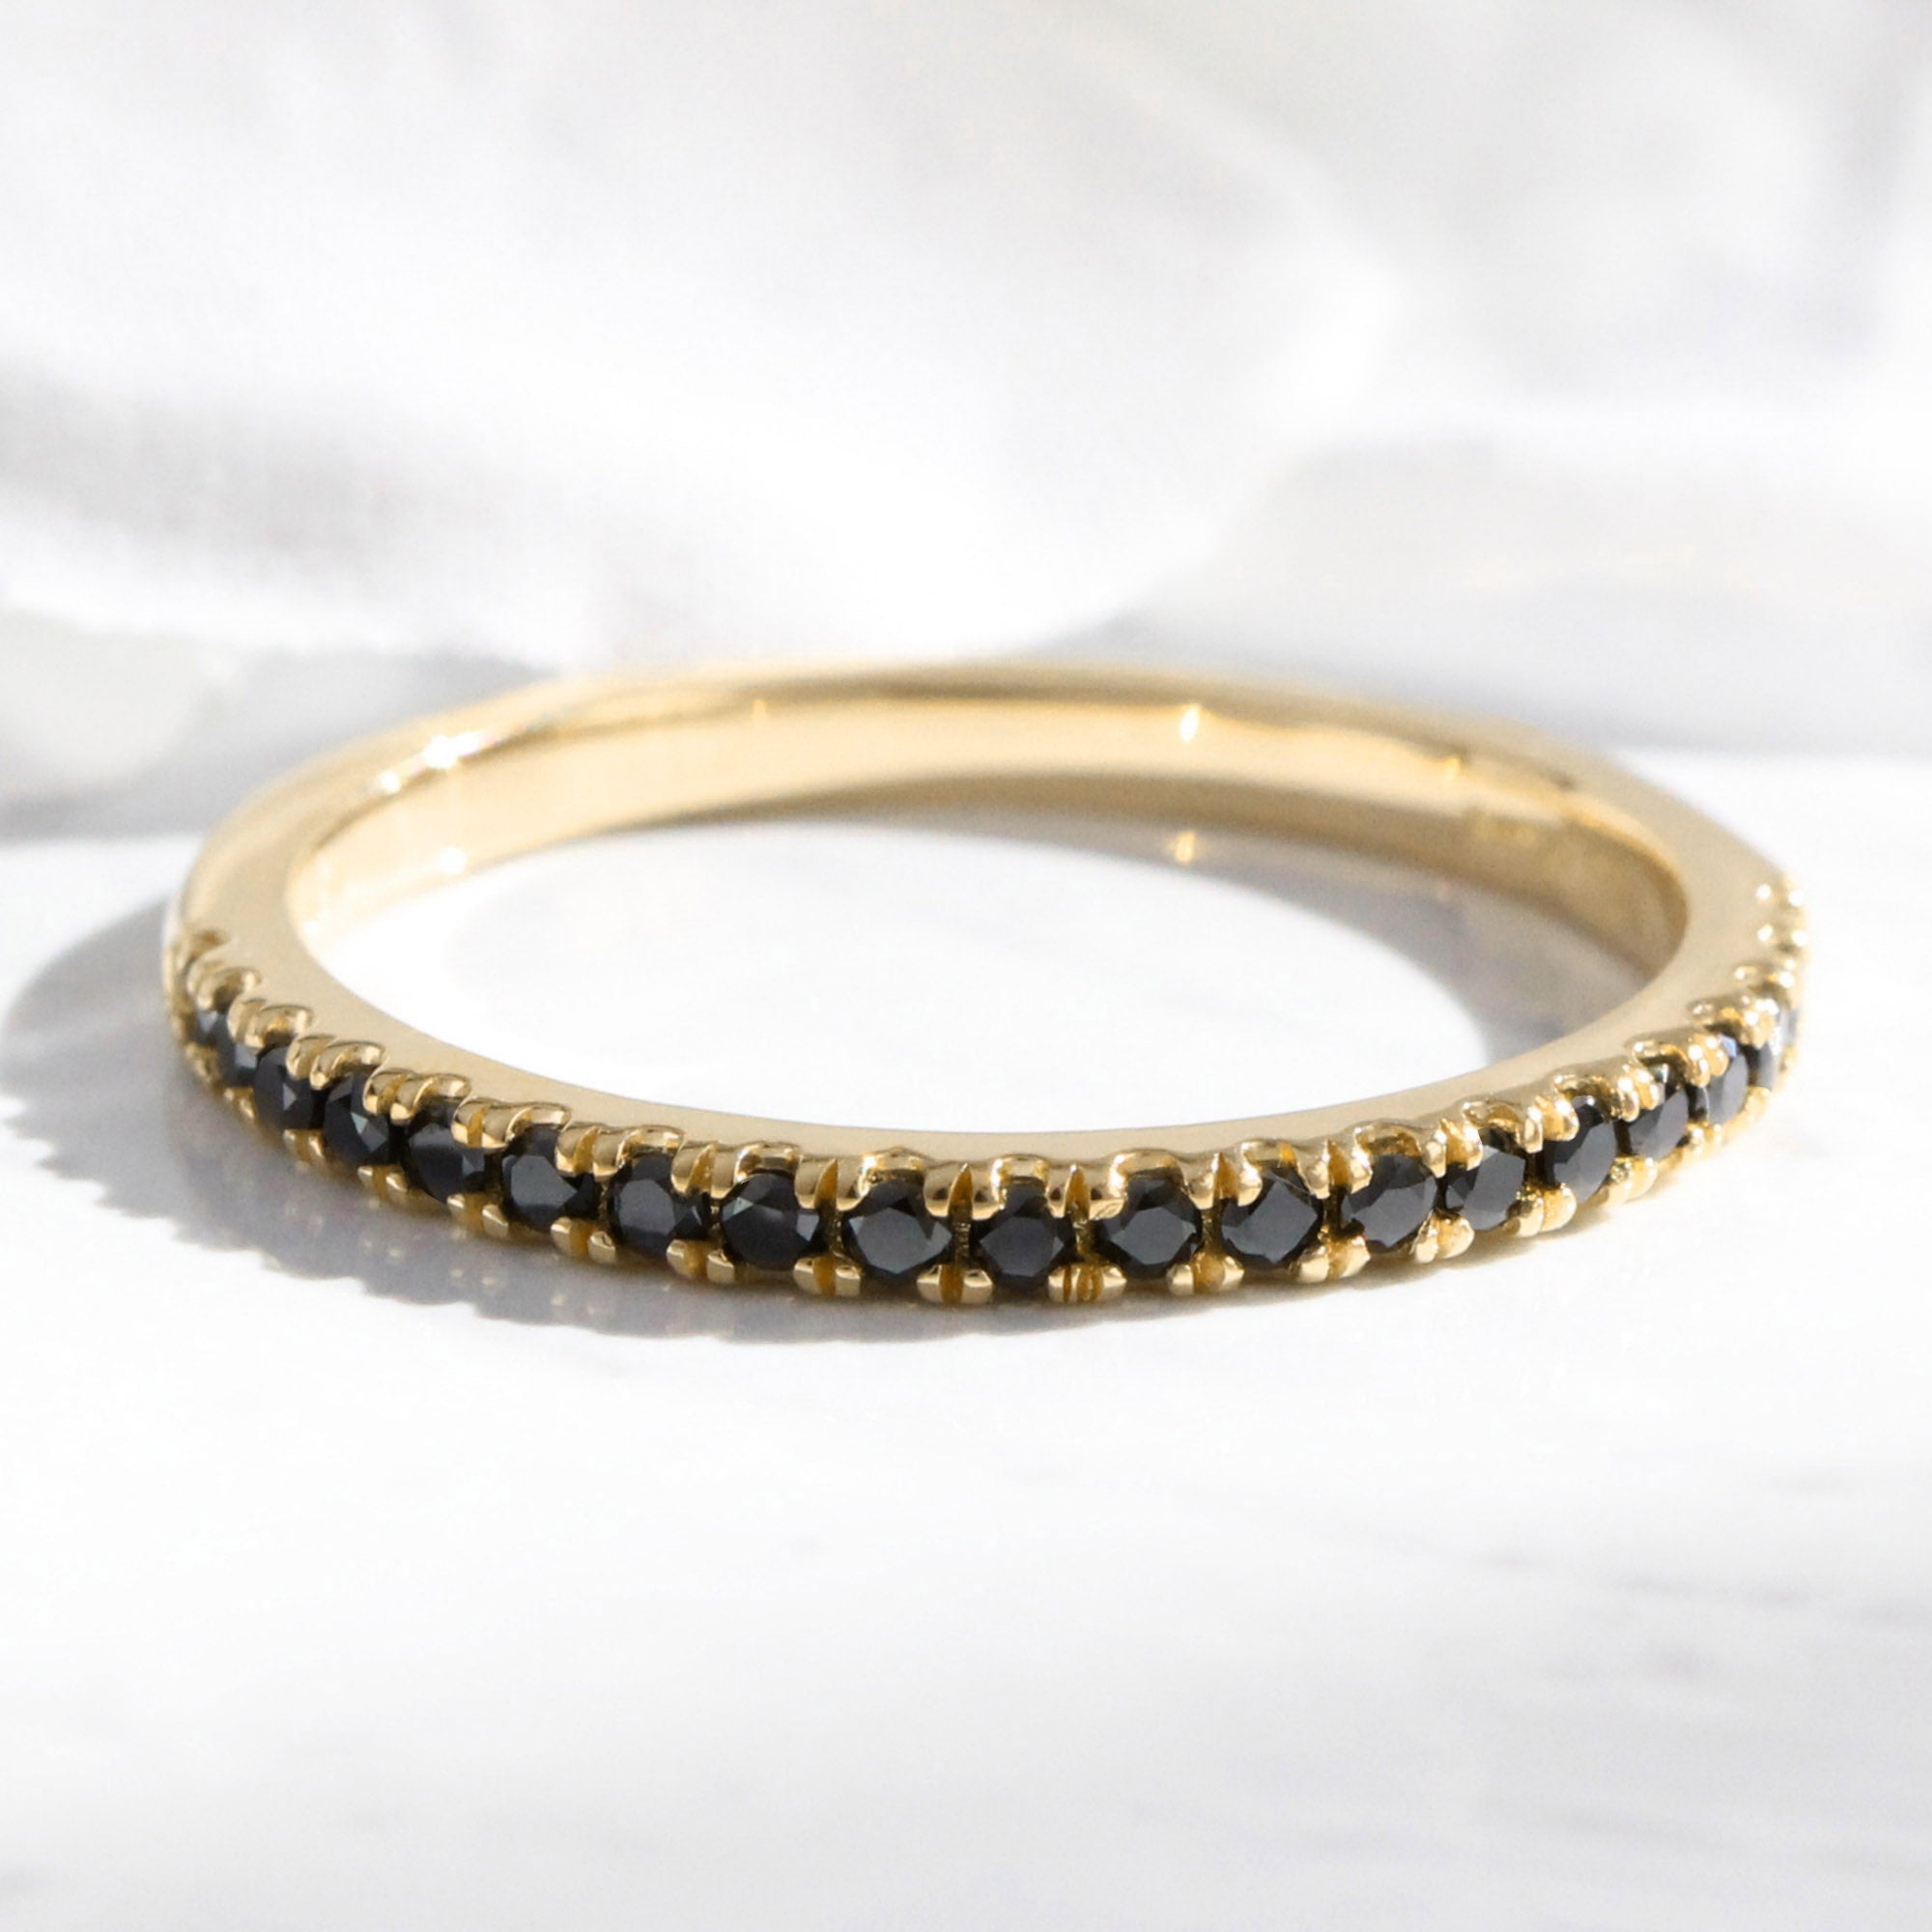 Pave black diamond wedding ring yellow gold half eternity wedding band la more design jewelry